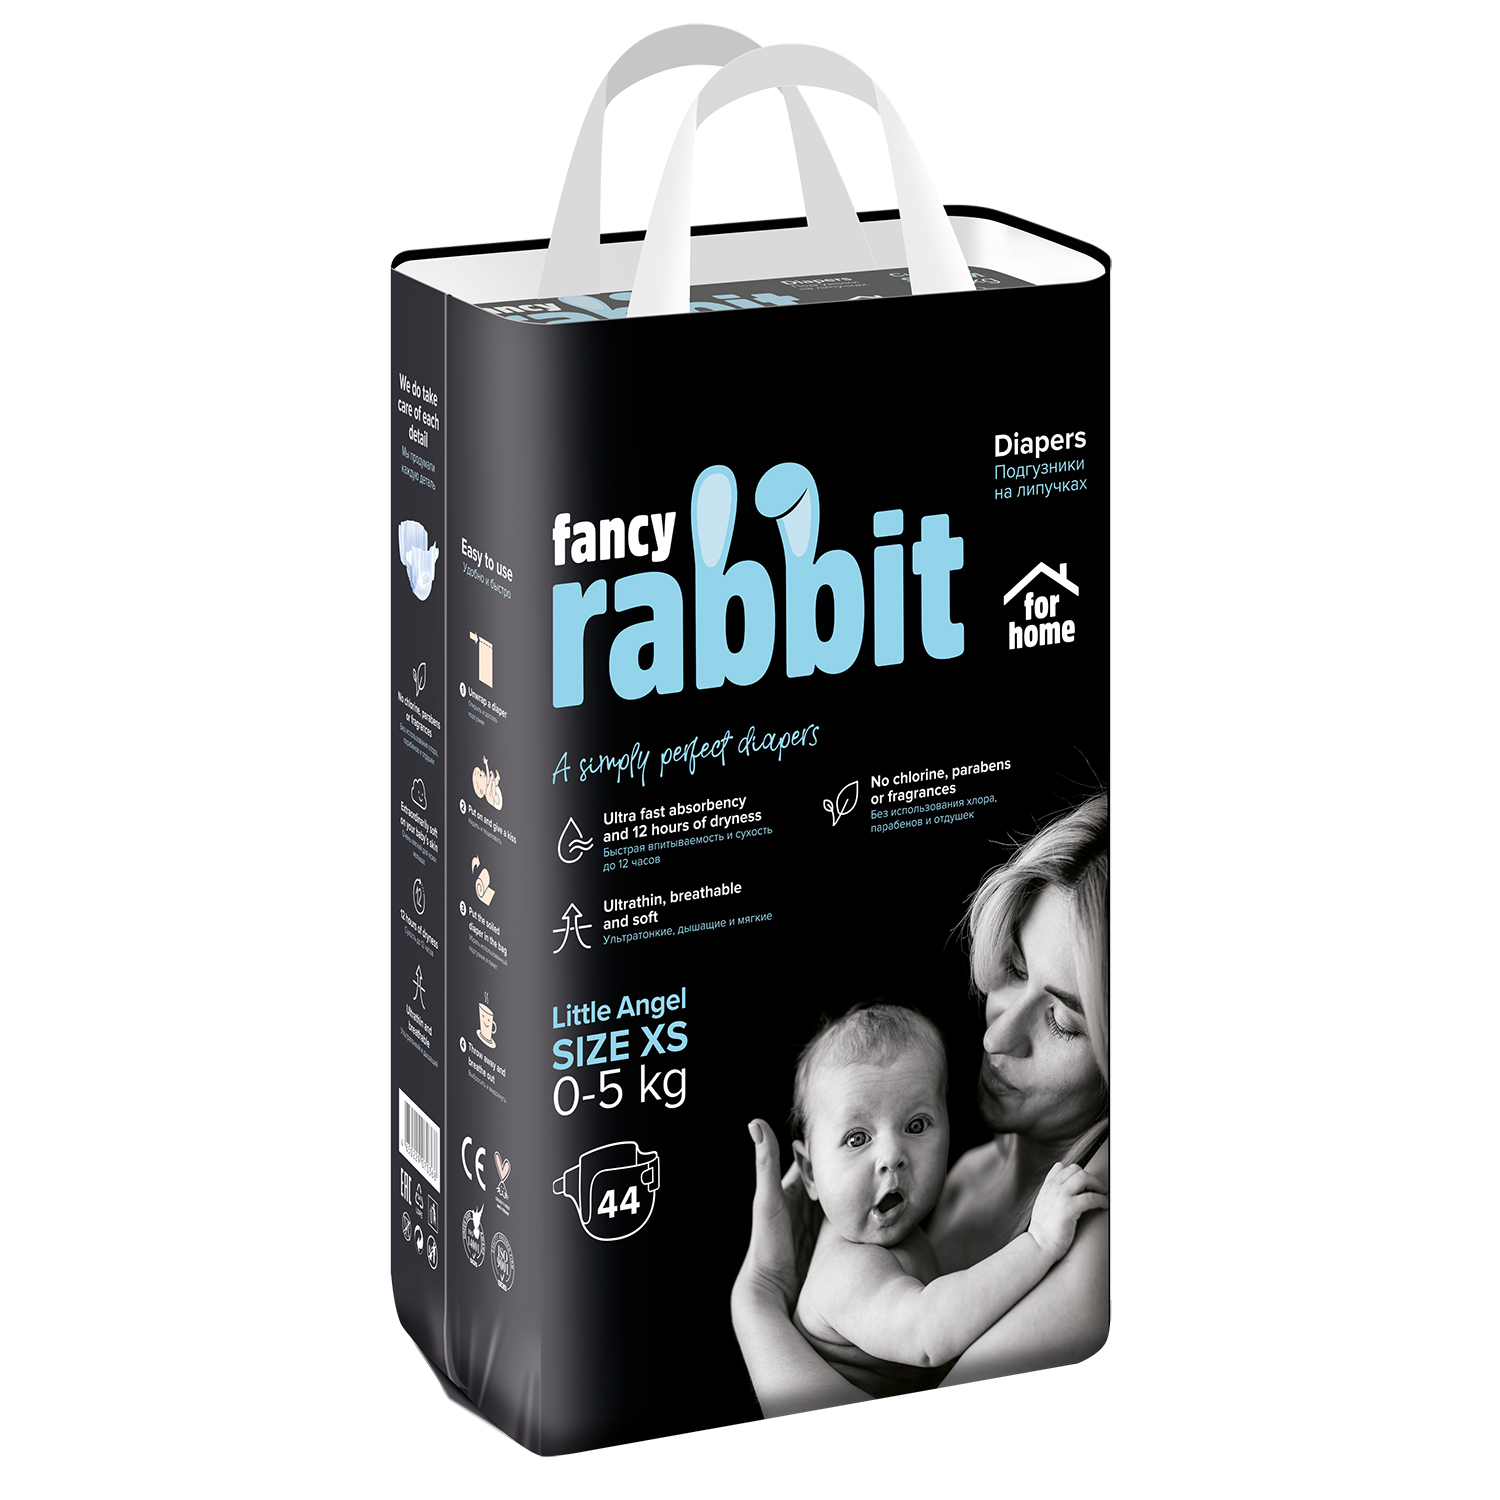 Подгузники Fancy Rabbit for home xs, 0-5 кг, 44 шт triol подгузники для животных xl